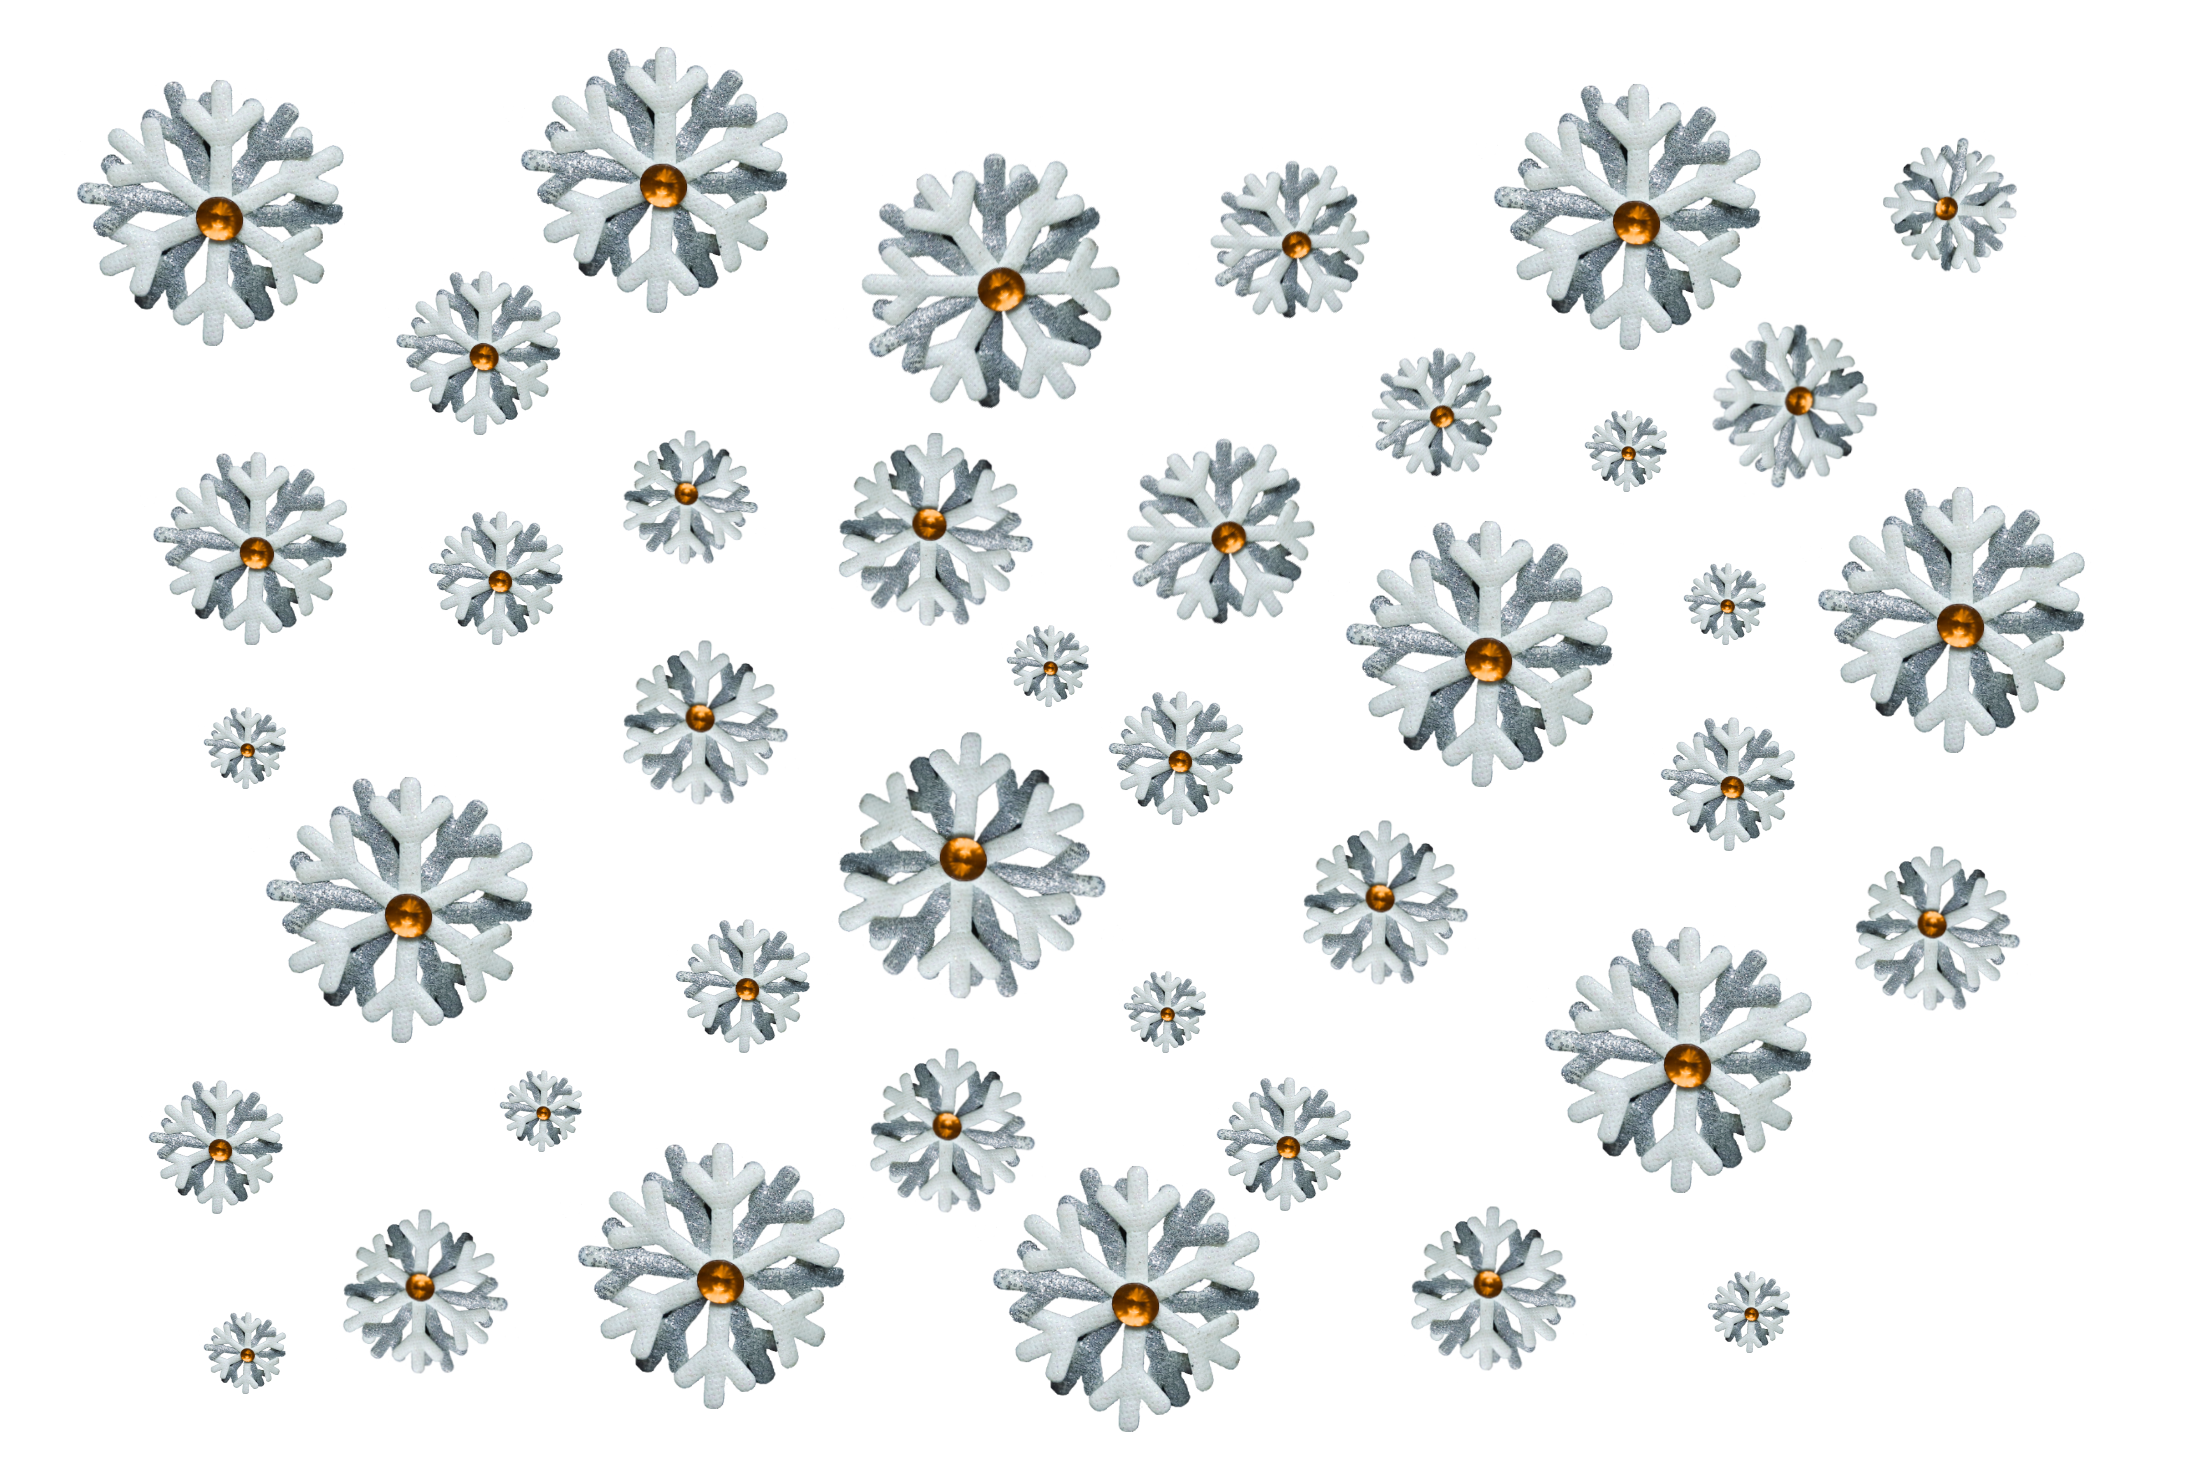 Artificial Decorative Snowflakes PNG